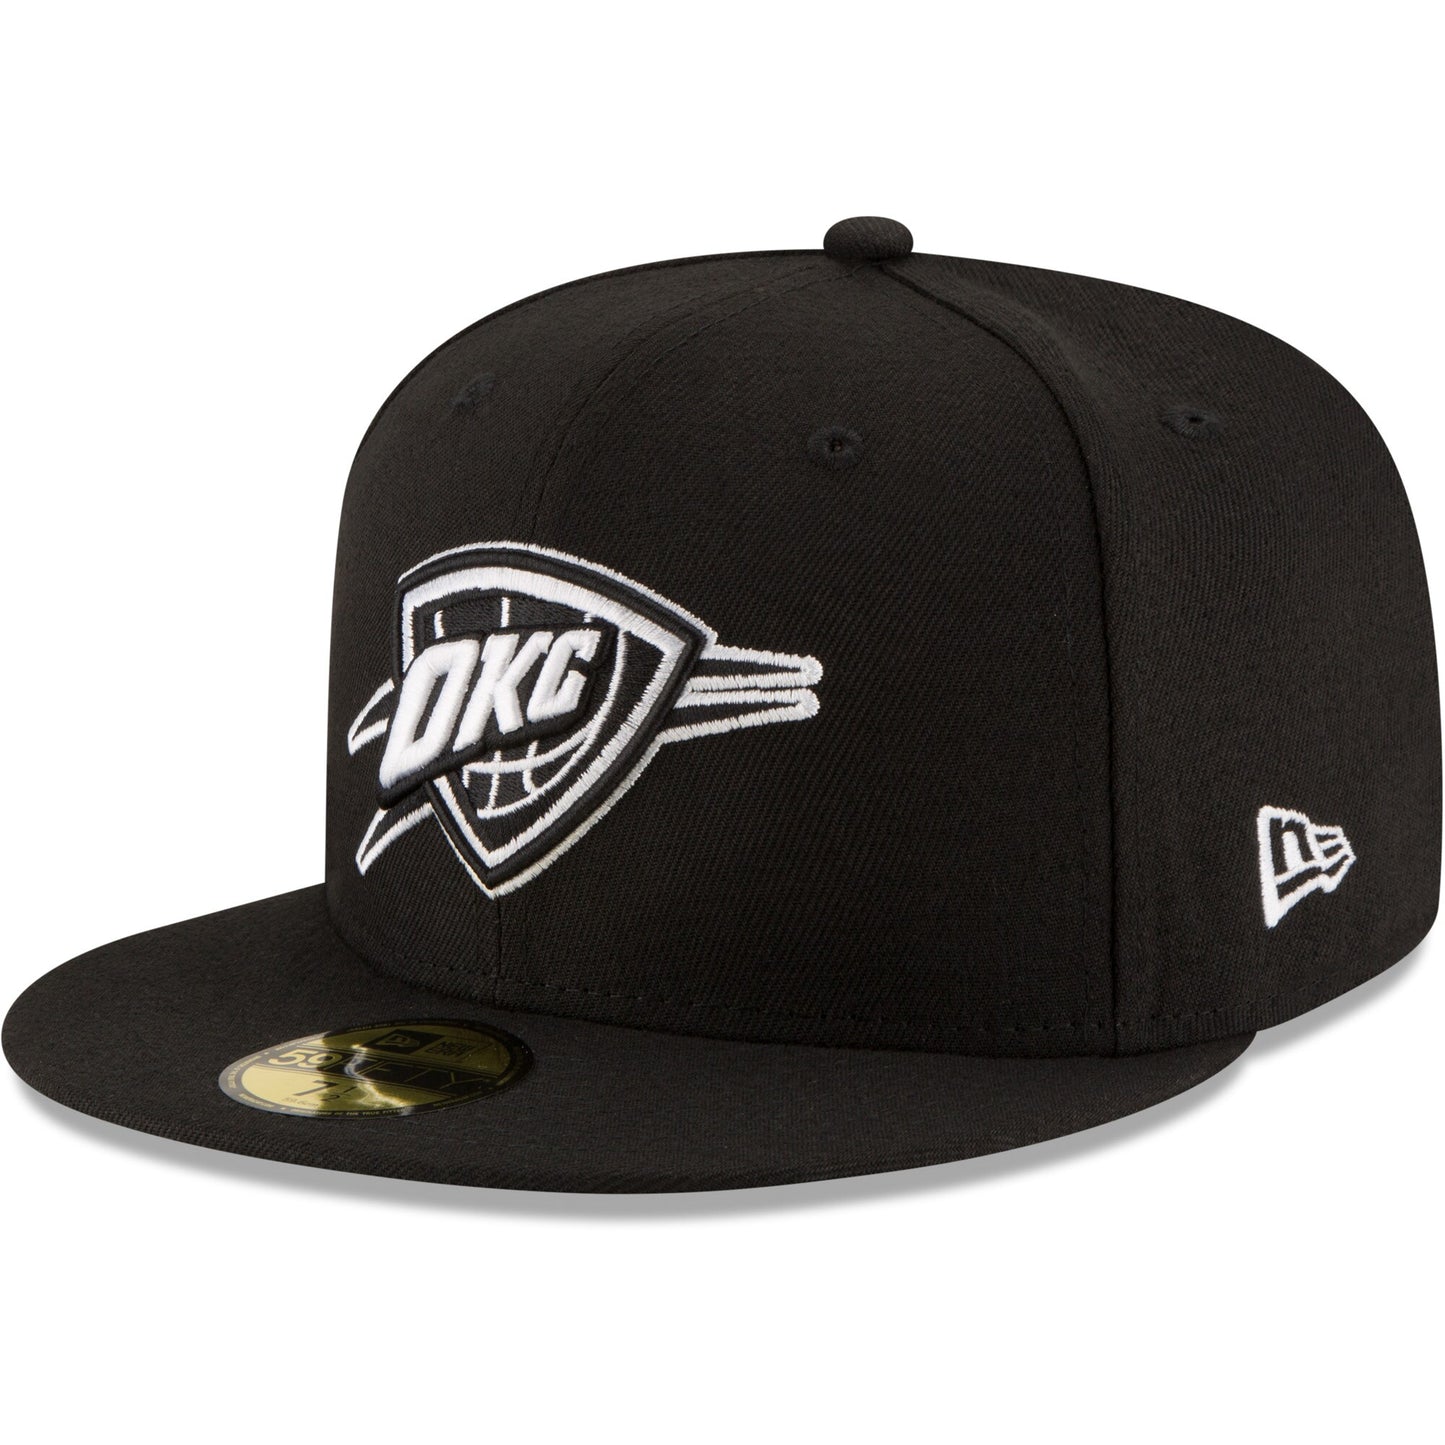 Oklahoma City Thunder New Era Black & White Logo 59FIFTY Fitted Hat - Black